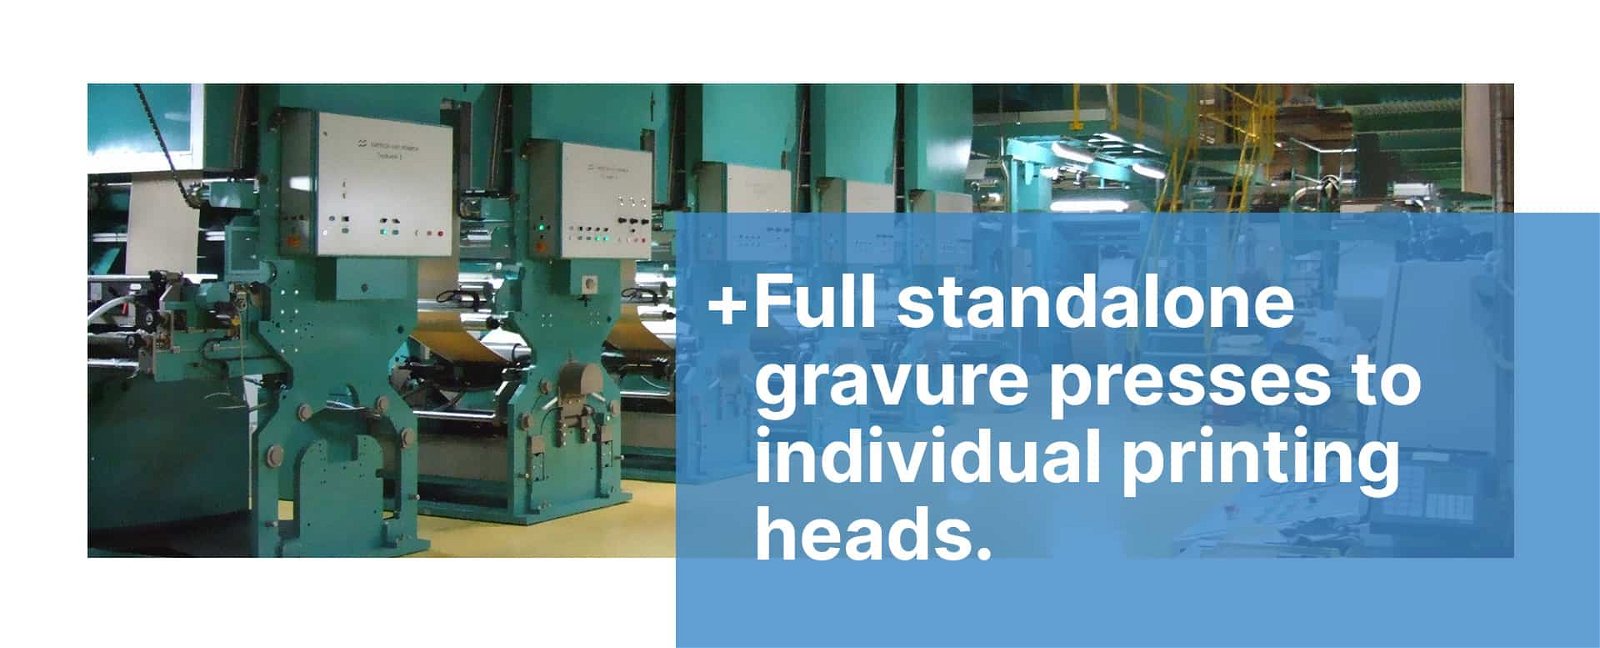 Full standalone gravure presses to individual printing heads.